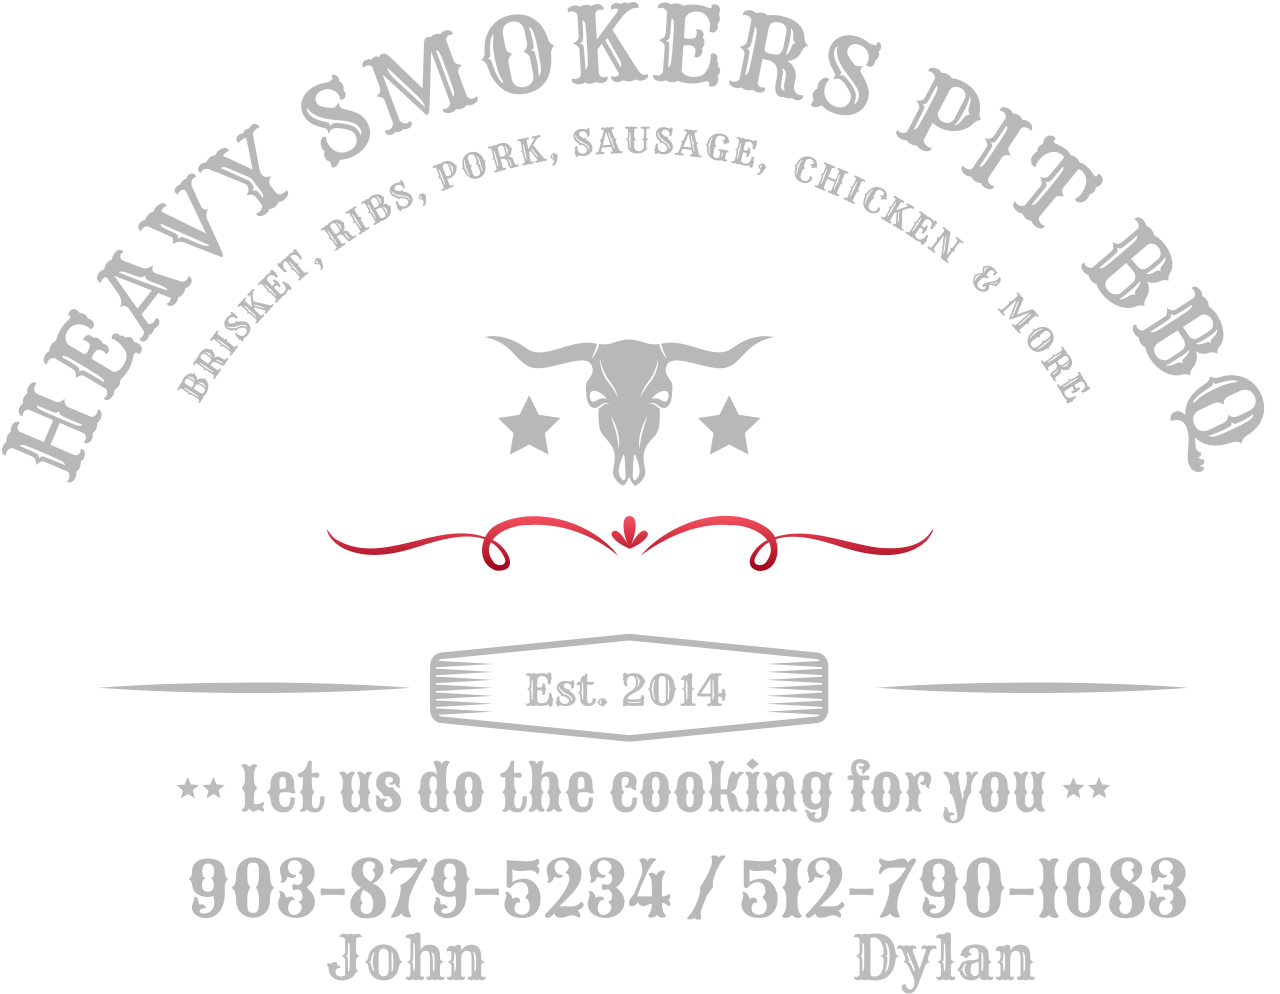 HEAVY SMOKERS PIT BBQ 's logo